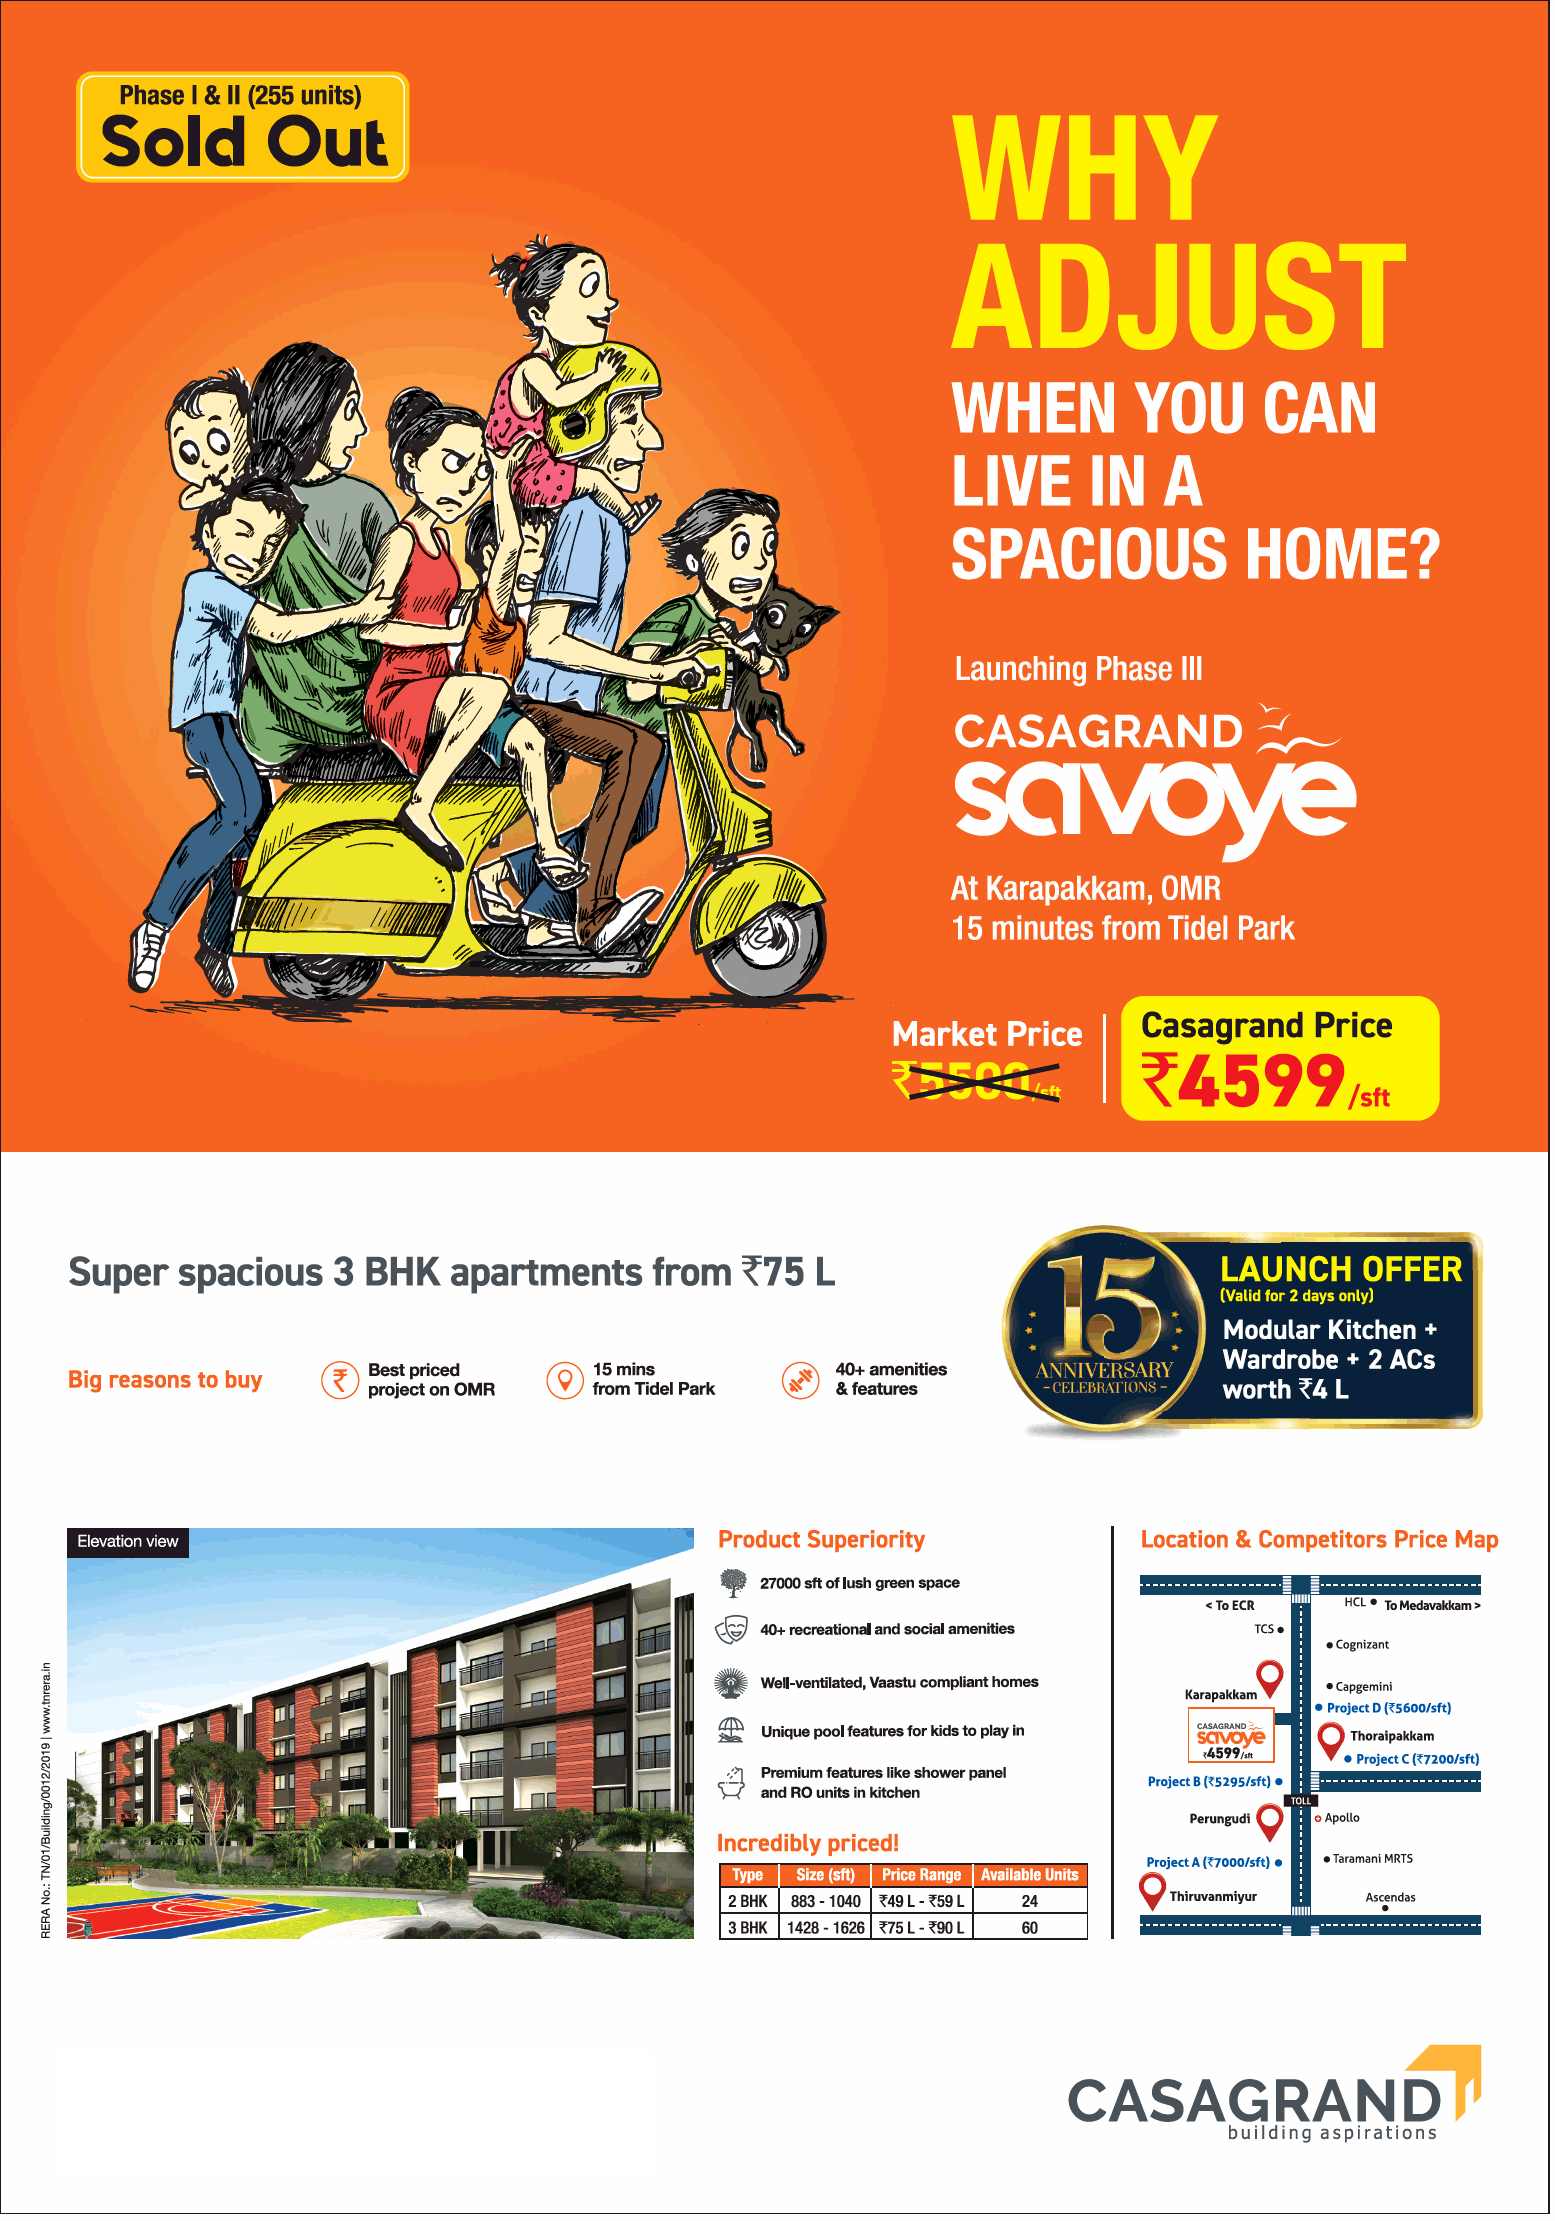 Super spacious 3 BHK apartments from Rs 75 Lac at Casagrand Savoye, Chennai